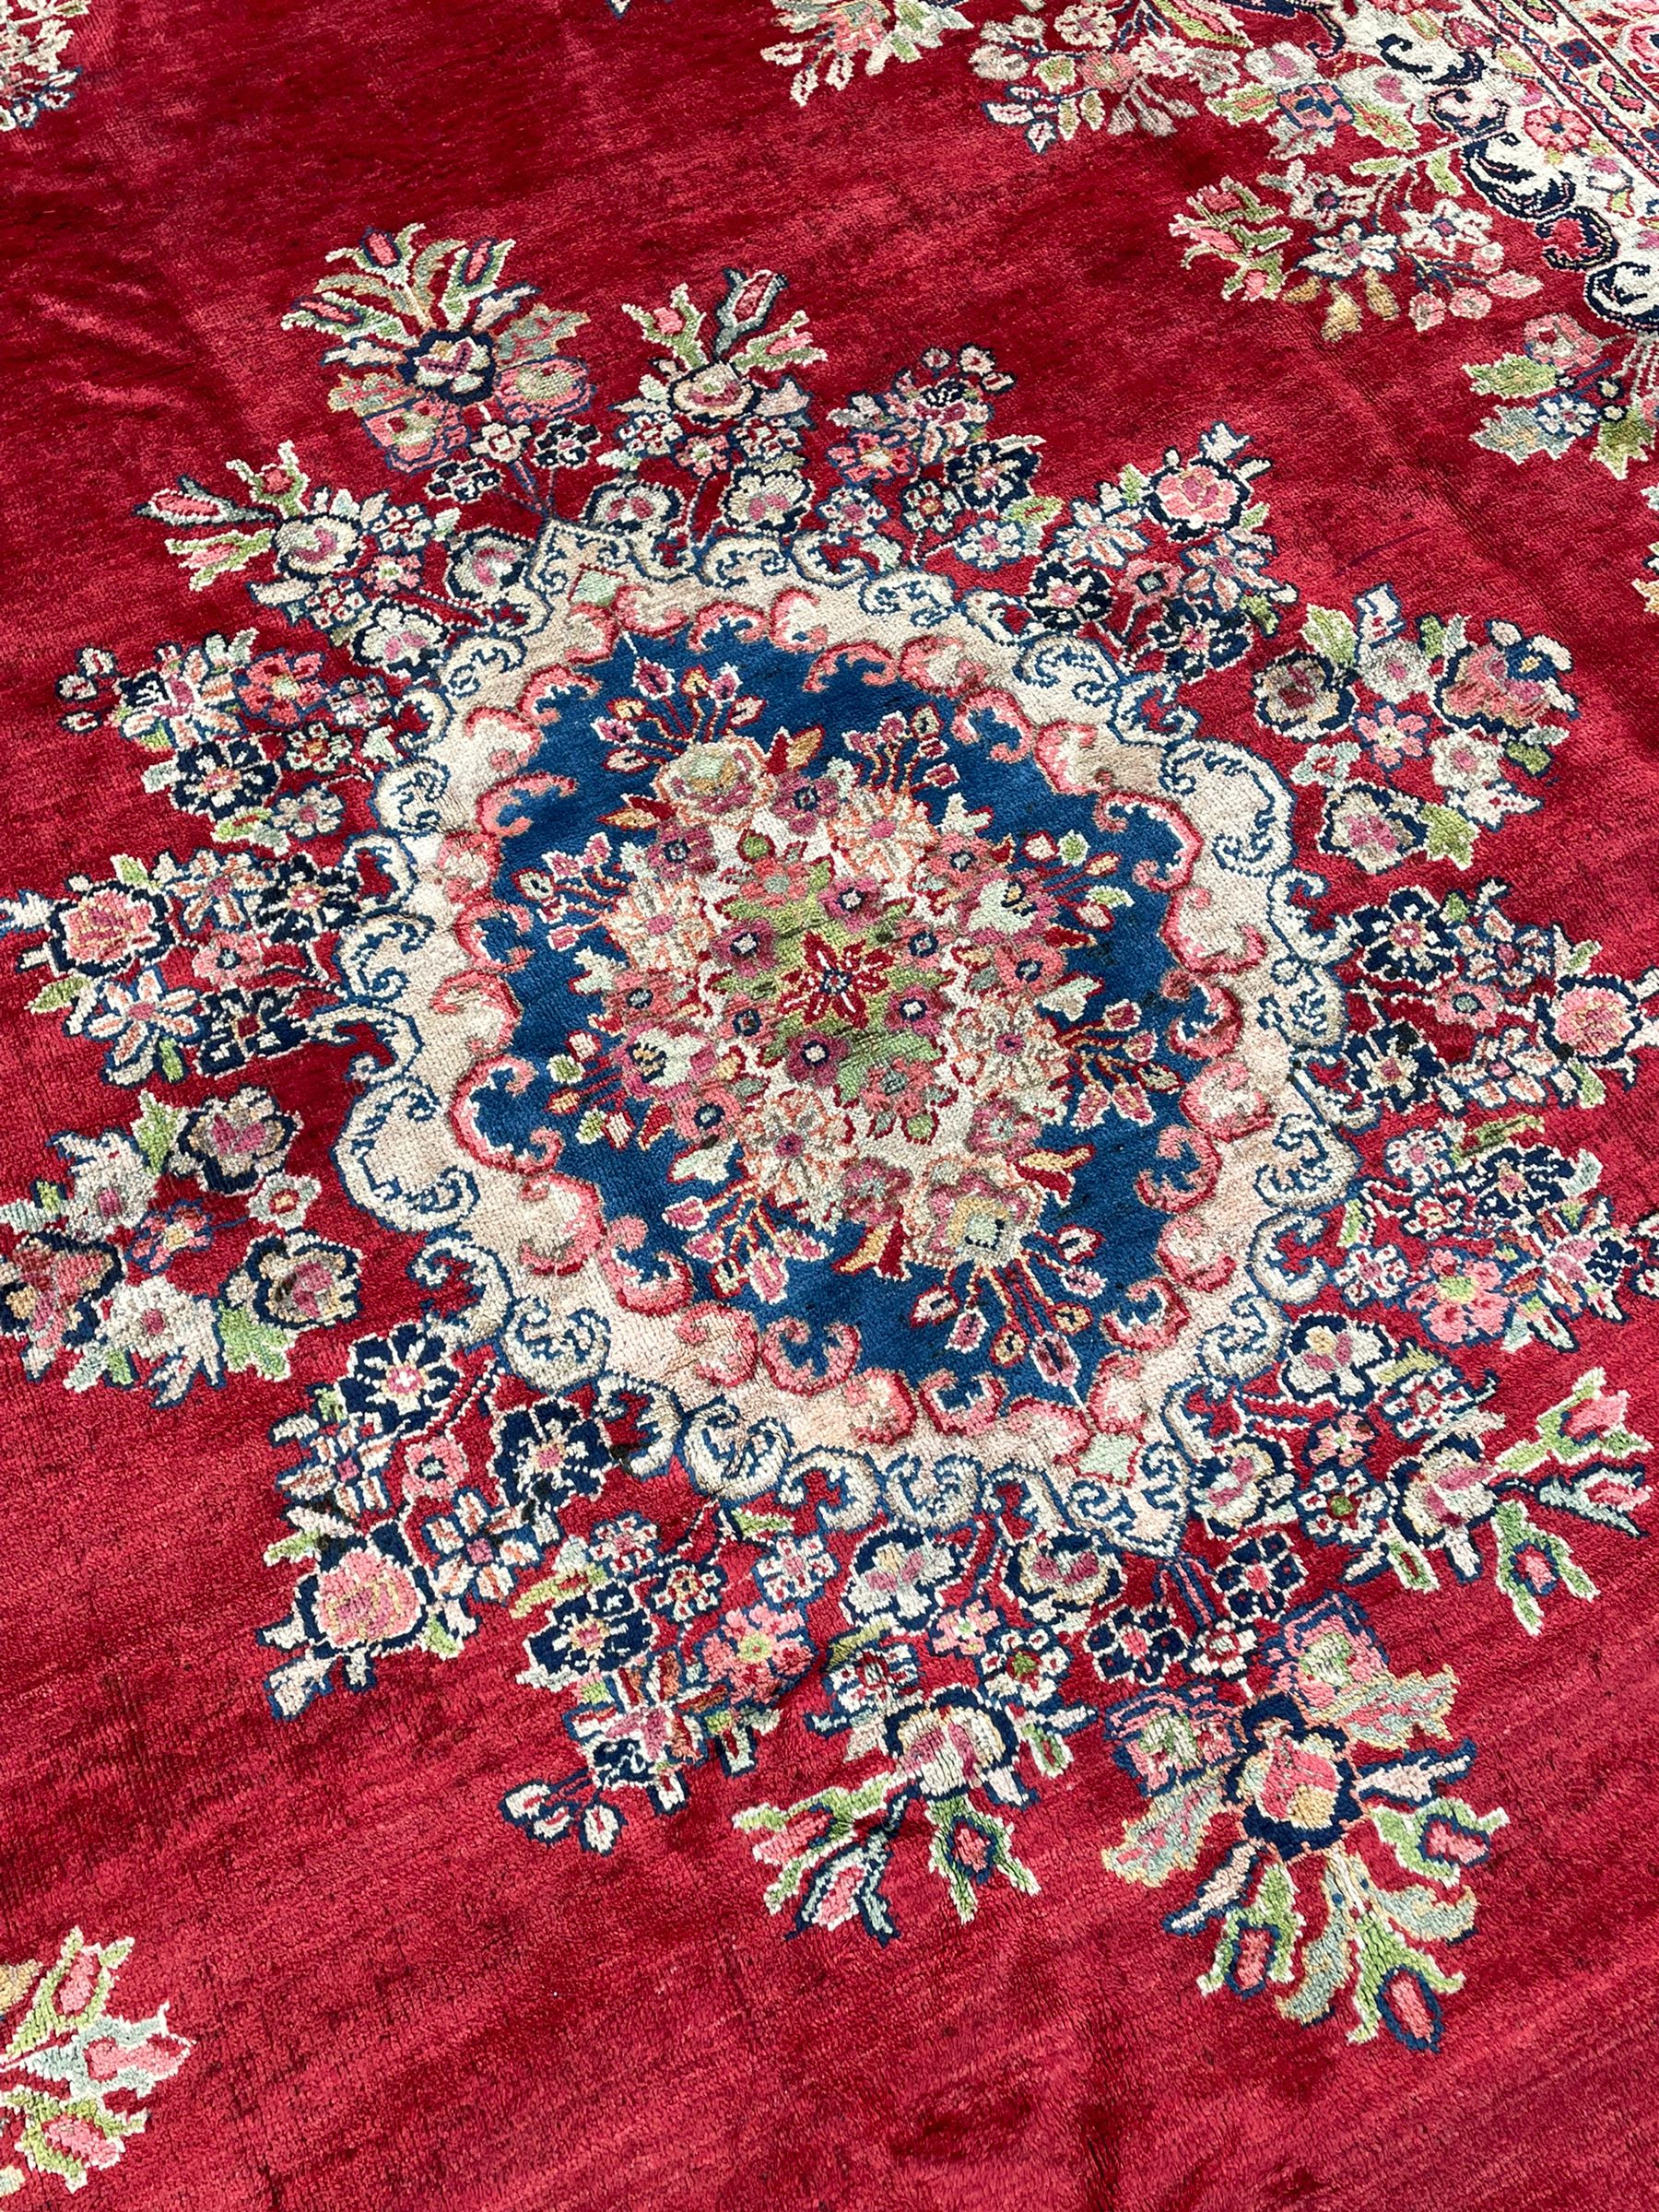 Persian Mahal crimson ground carpet - Image 6 of 8